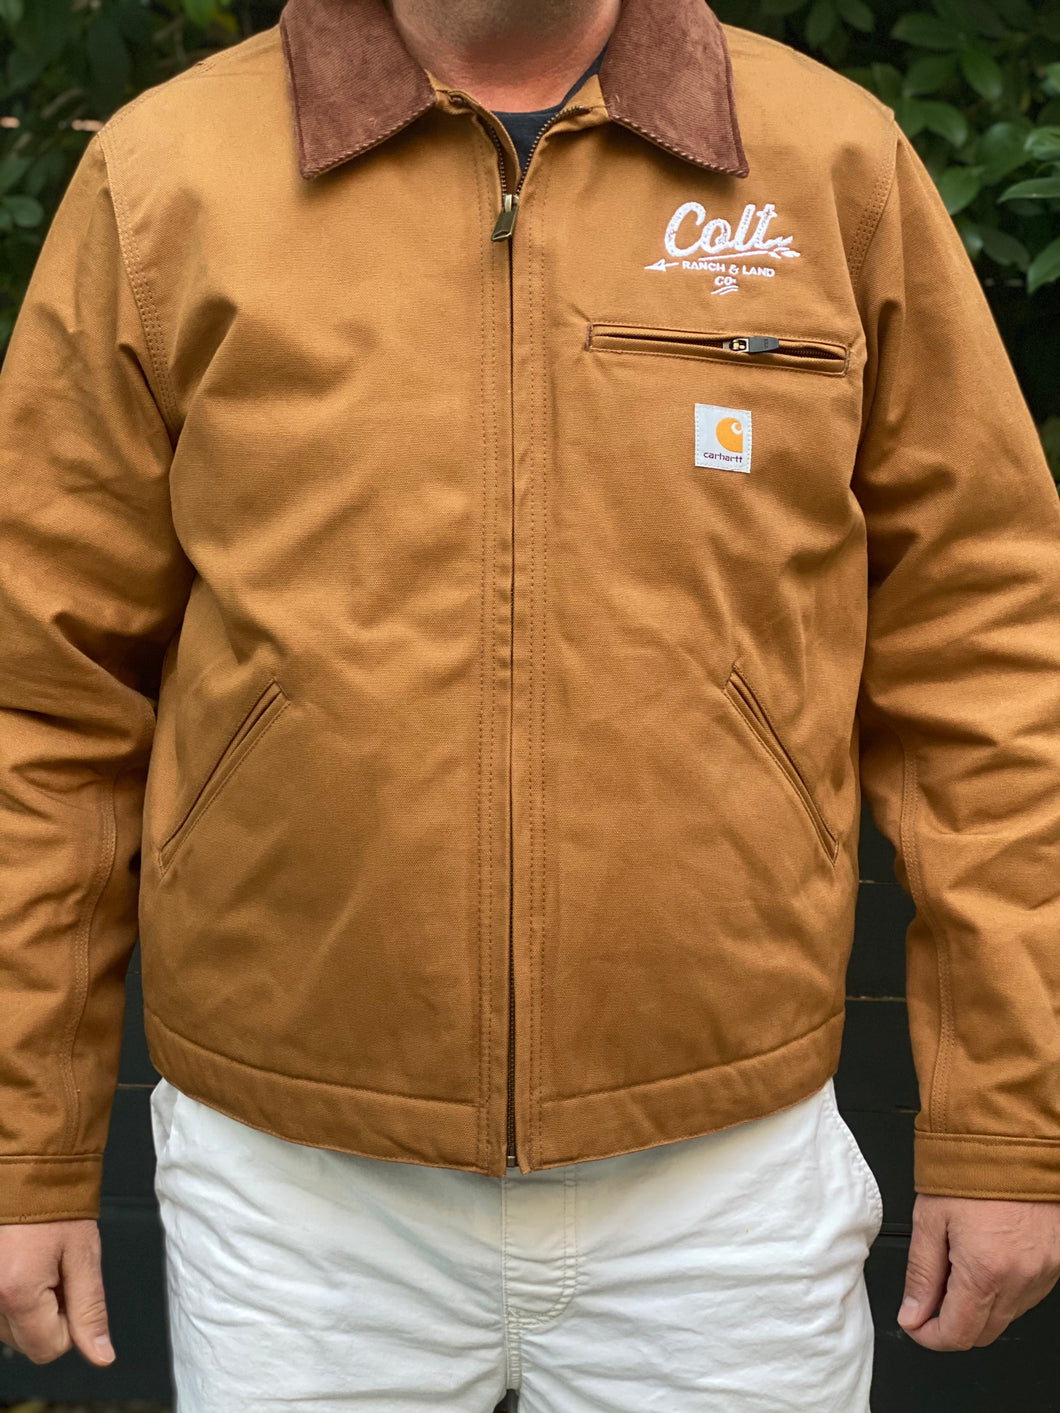 Colt Ranch Carhartt Jacket